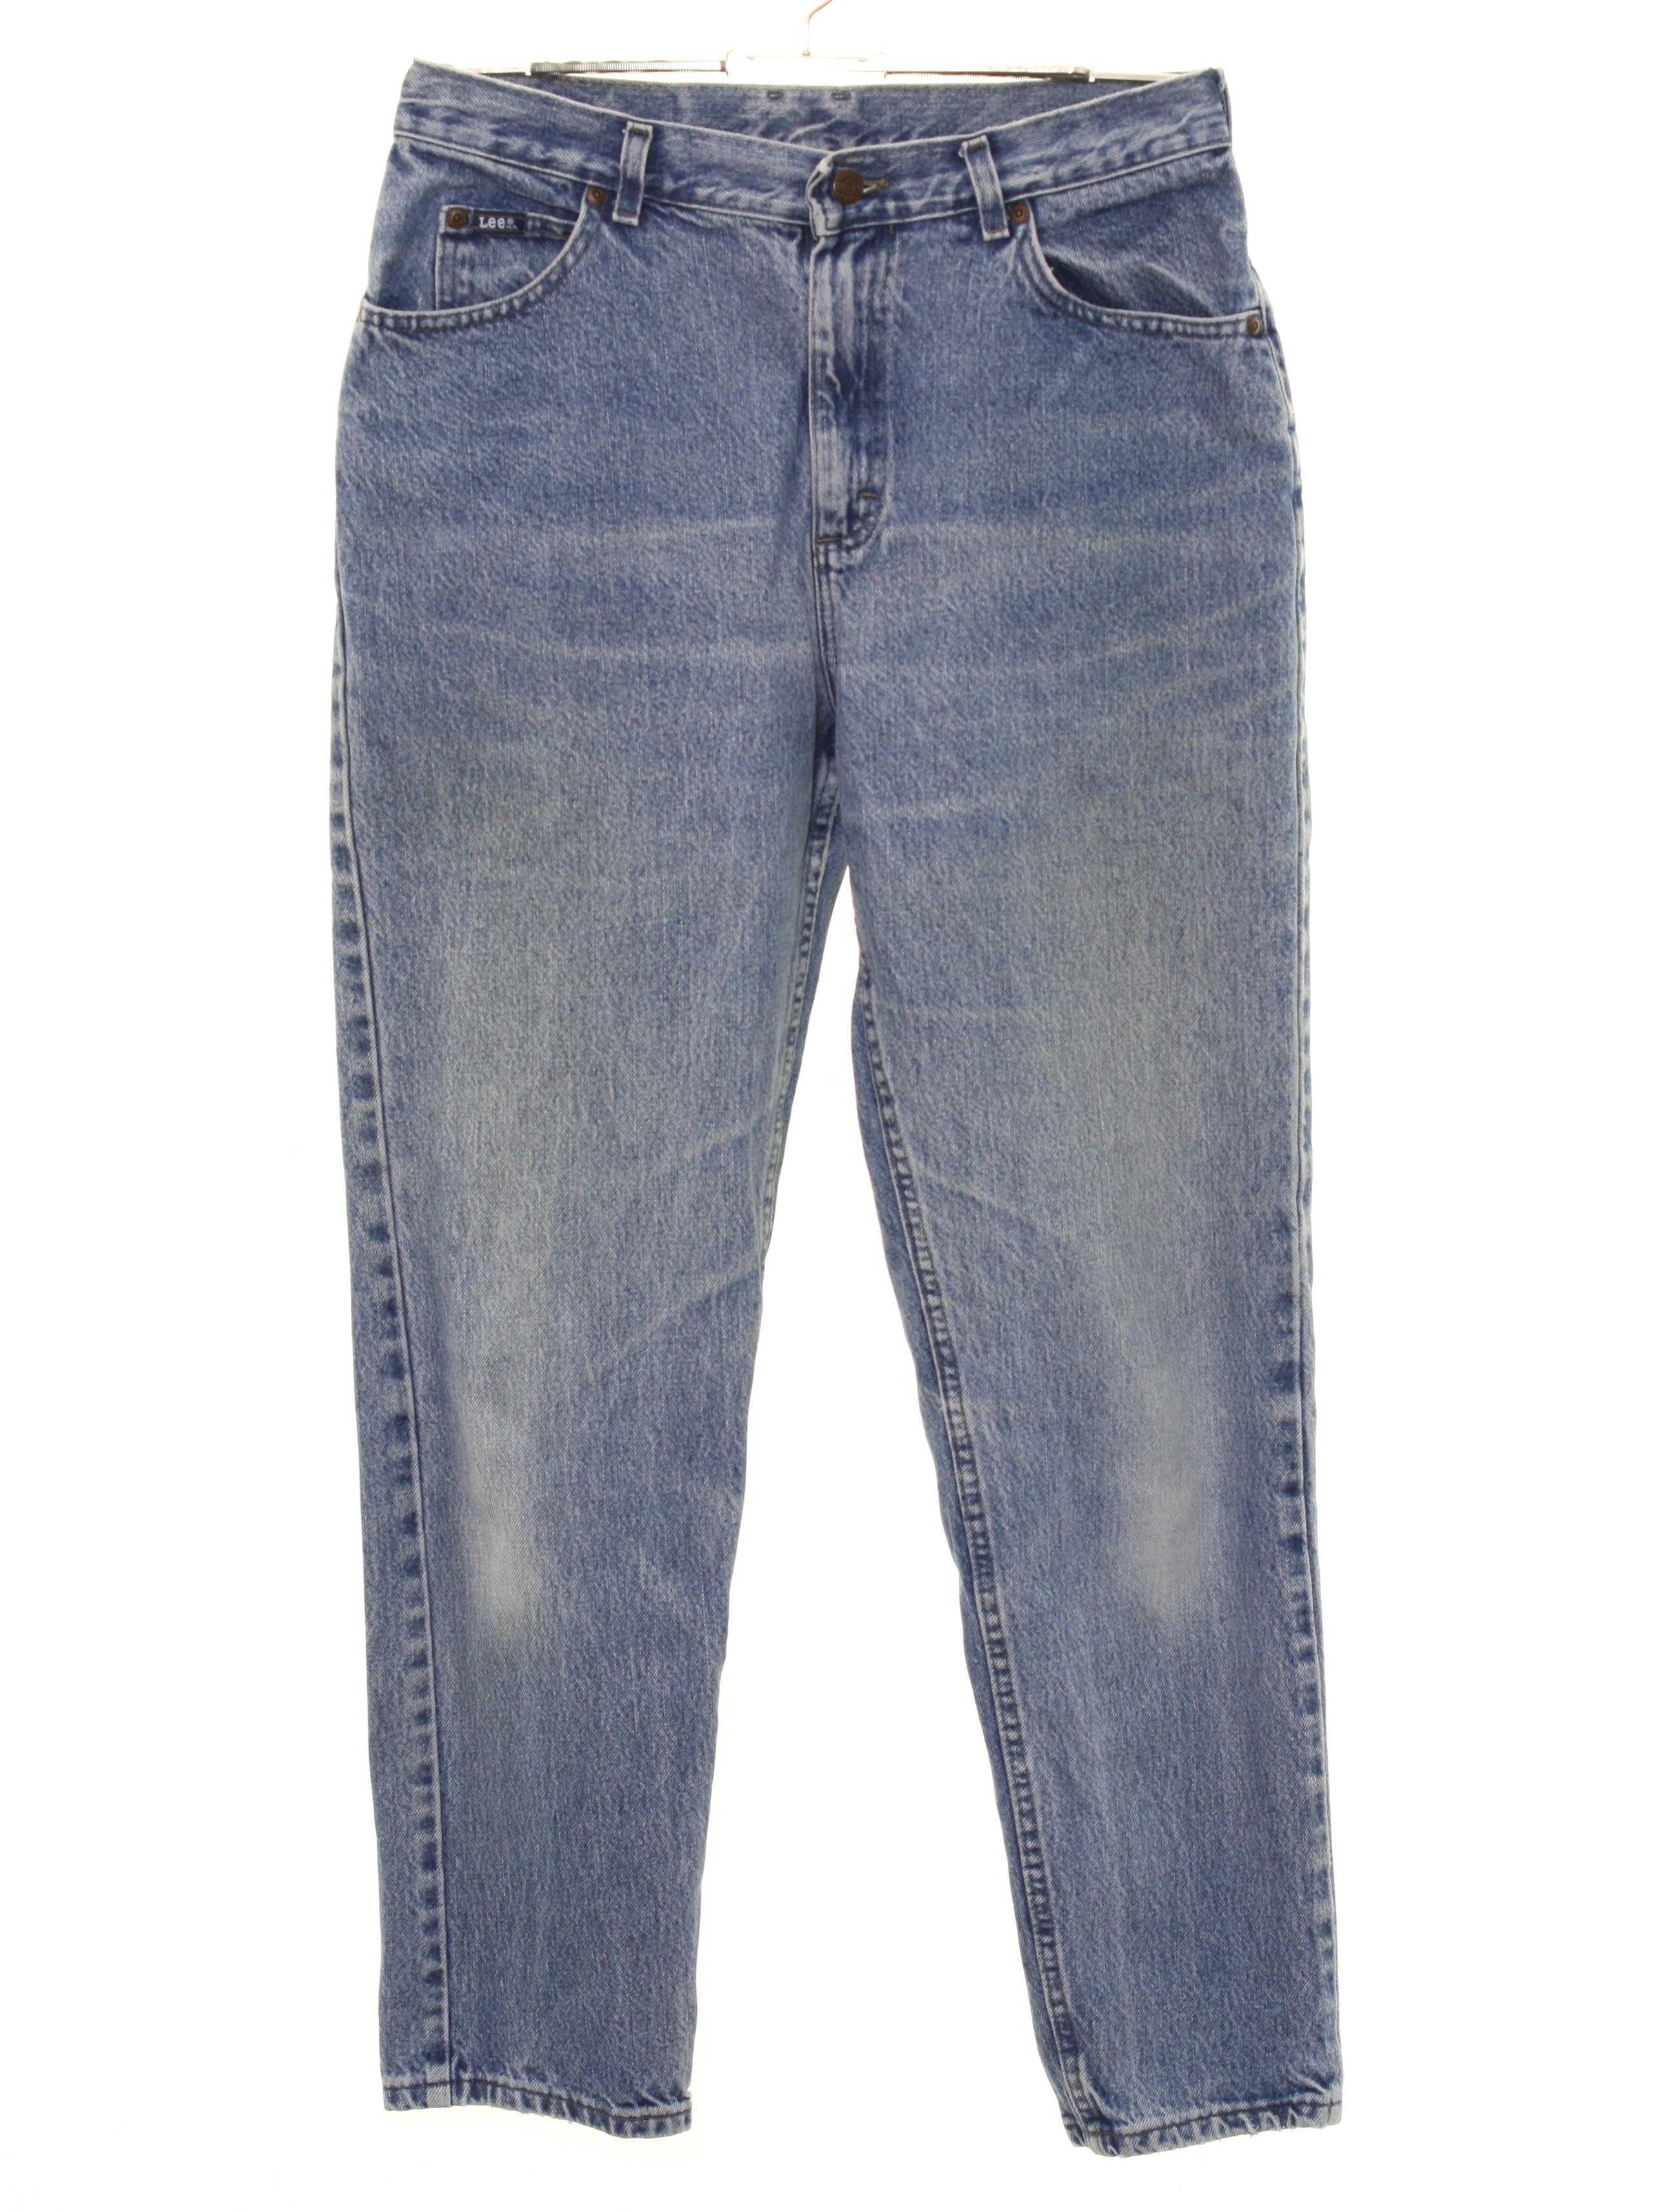 90s Vintage Lee Original Jeans Pants: 90s -Lee Original Jeans- Womens ...